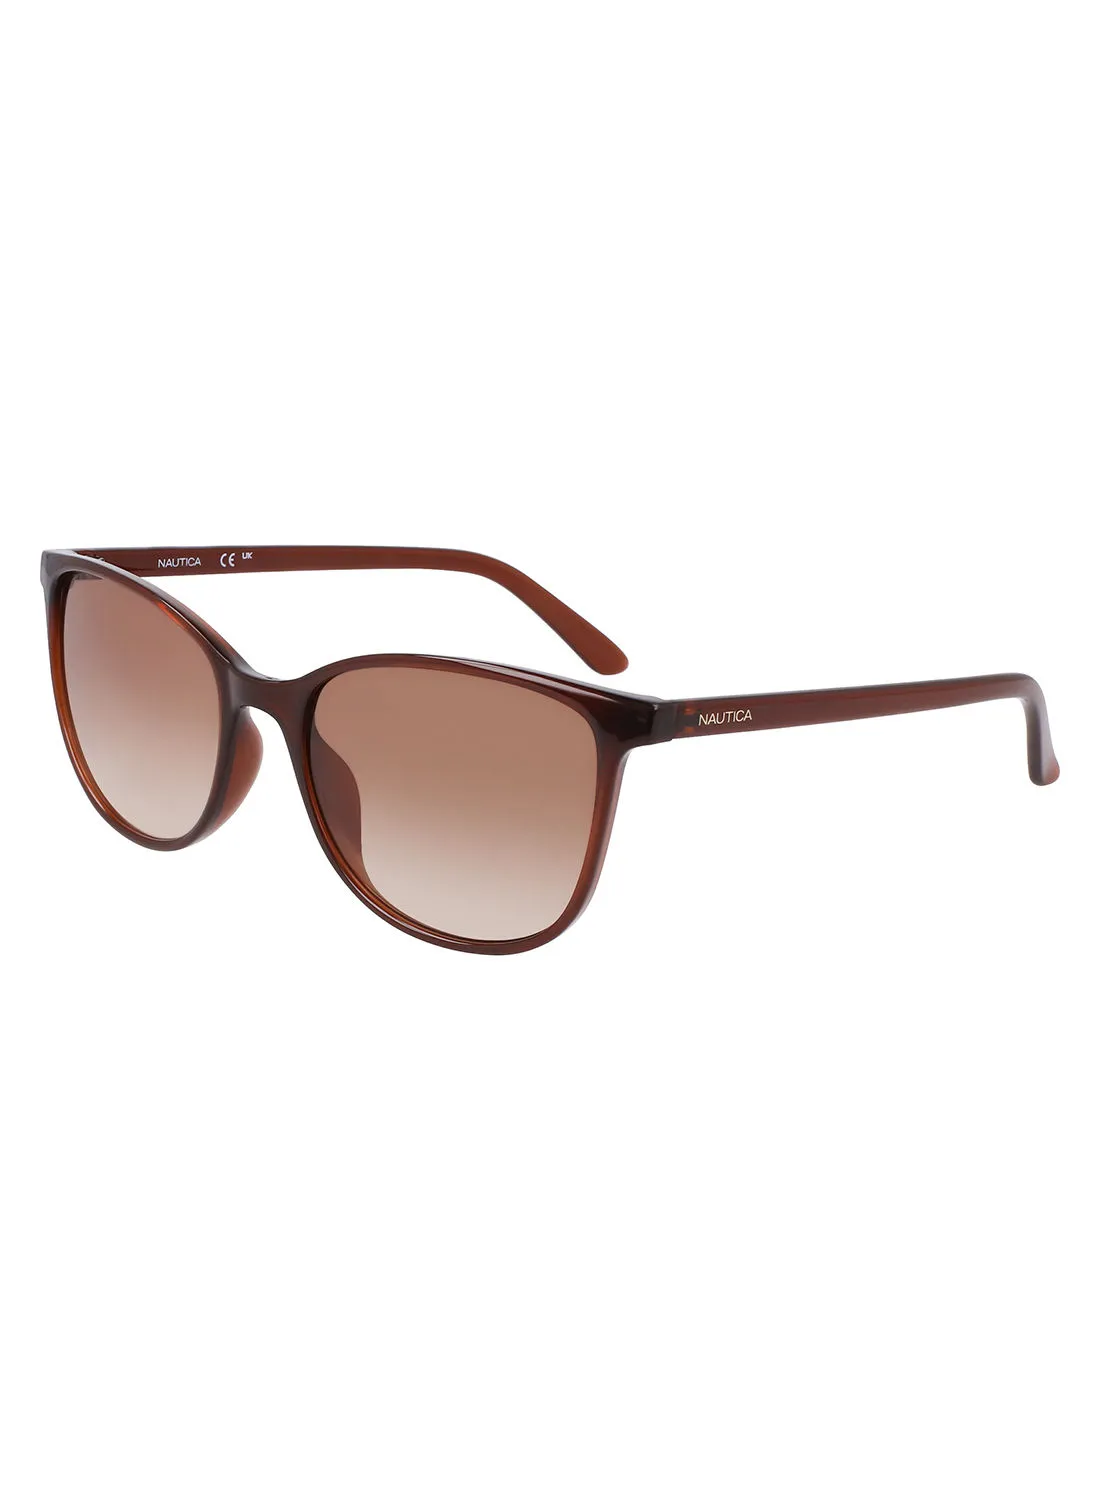 NAUTICA Women's Rectangular Sunglasses - N2243S-210-5618 - Lens Size: 56 Mm